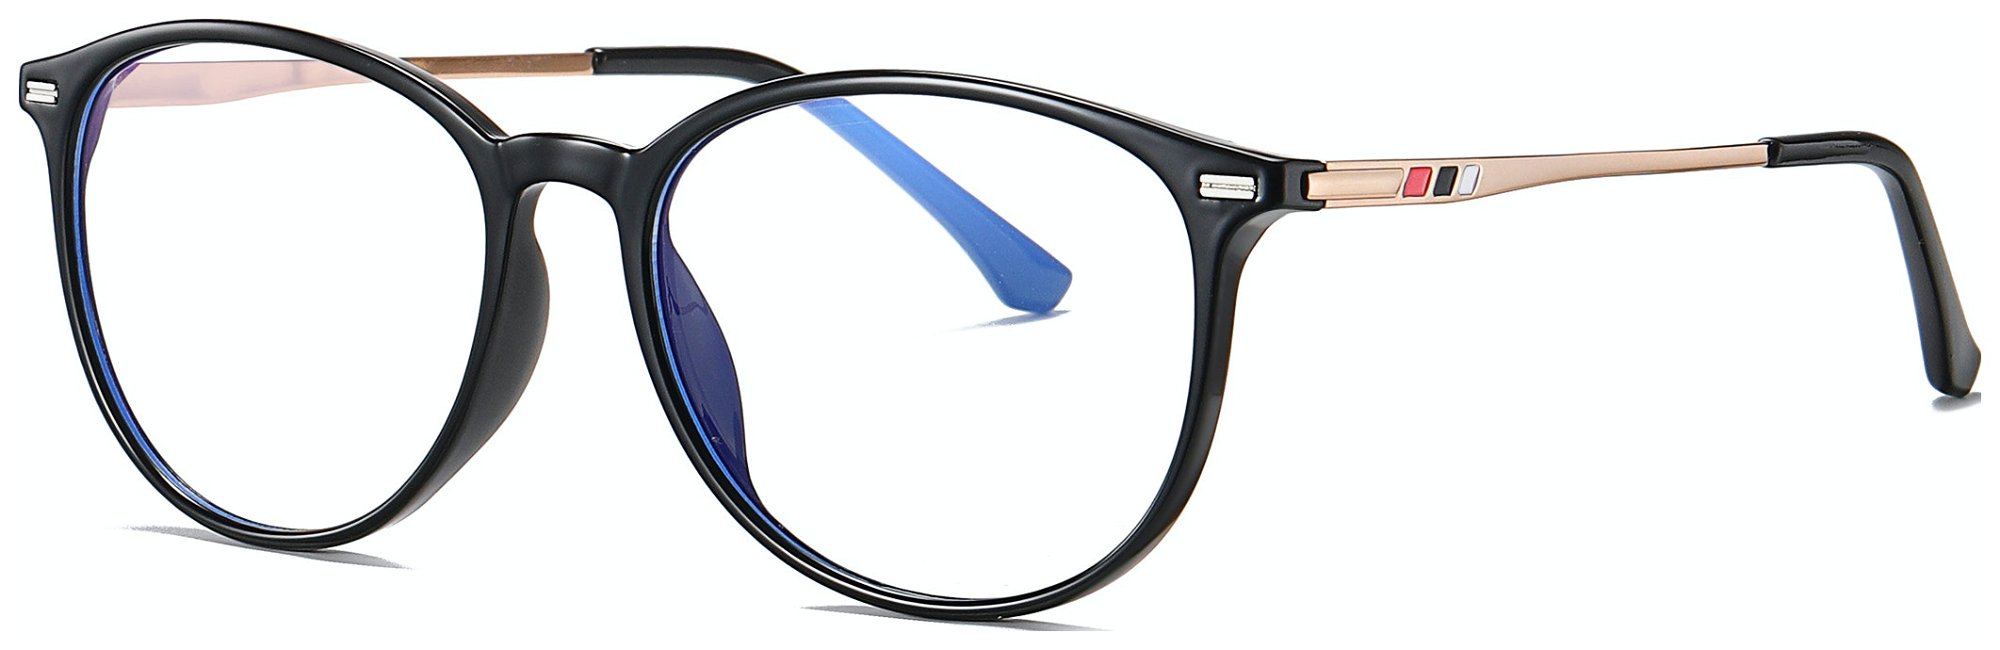 Regulær bluelight briller, Gory by Kaleu (H: 5,4 cm. x B: 1,7 cm. x L: 14,5 cm., Sort)